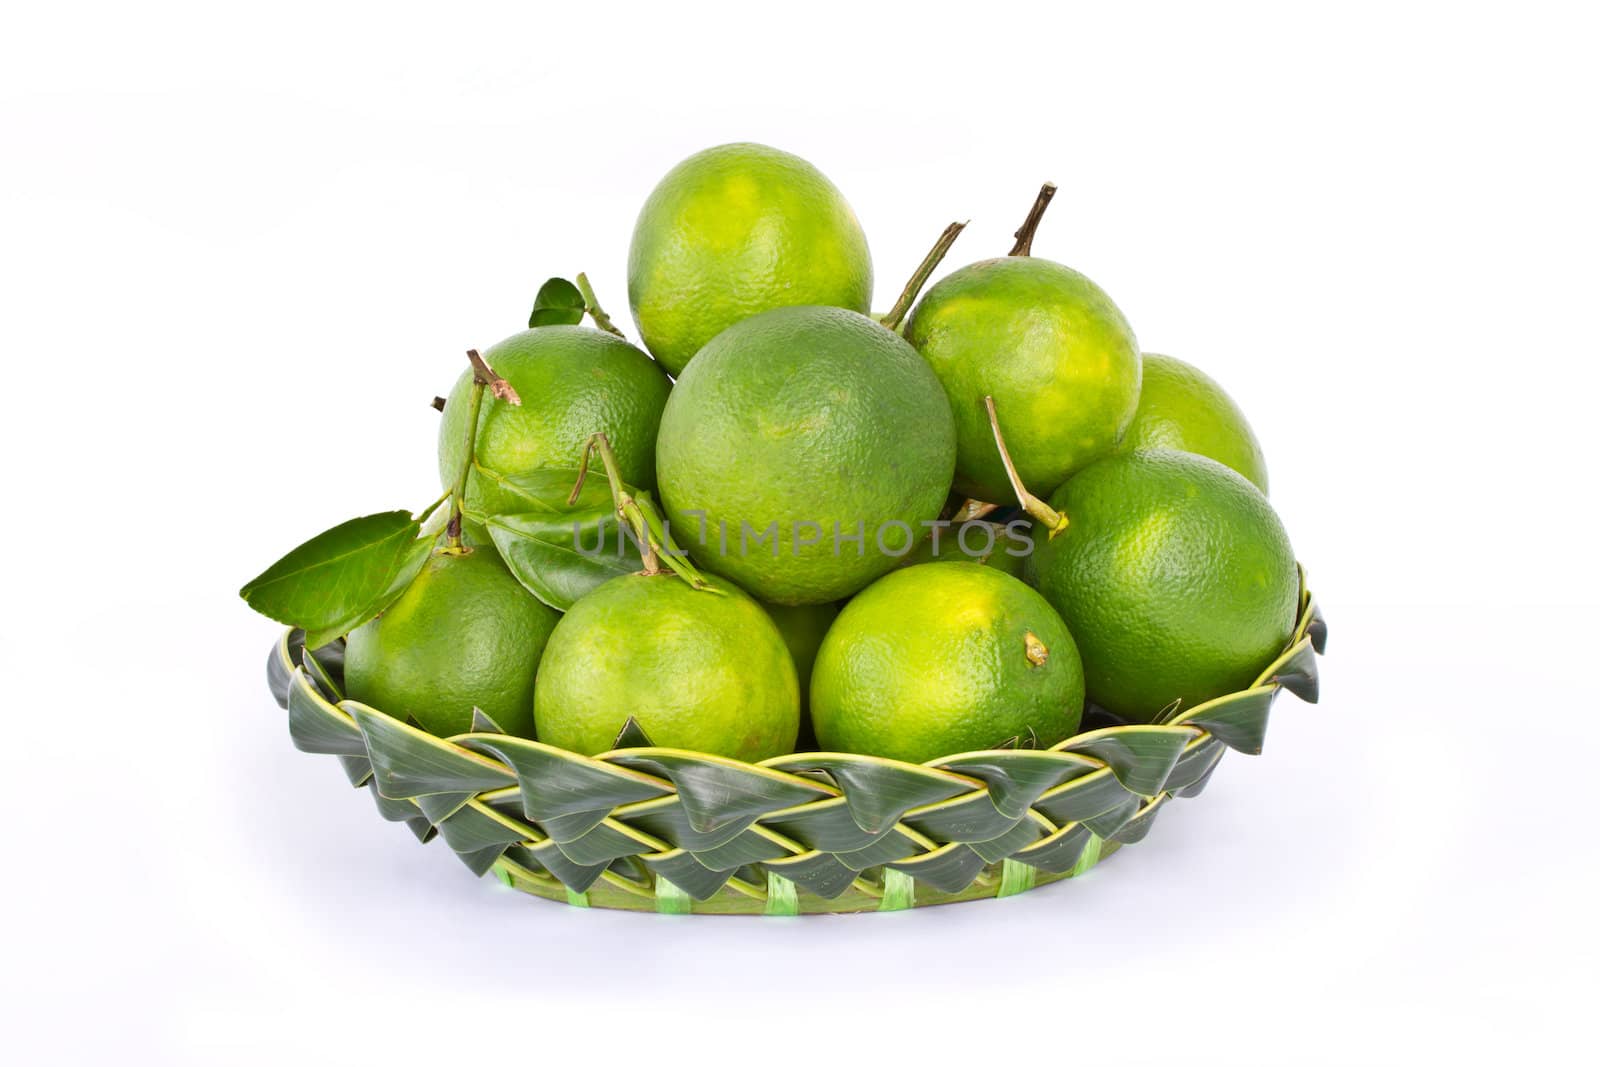 Green sweet oranges in coconut leaf basket by ta_khum